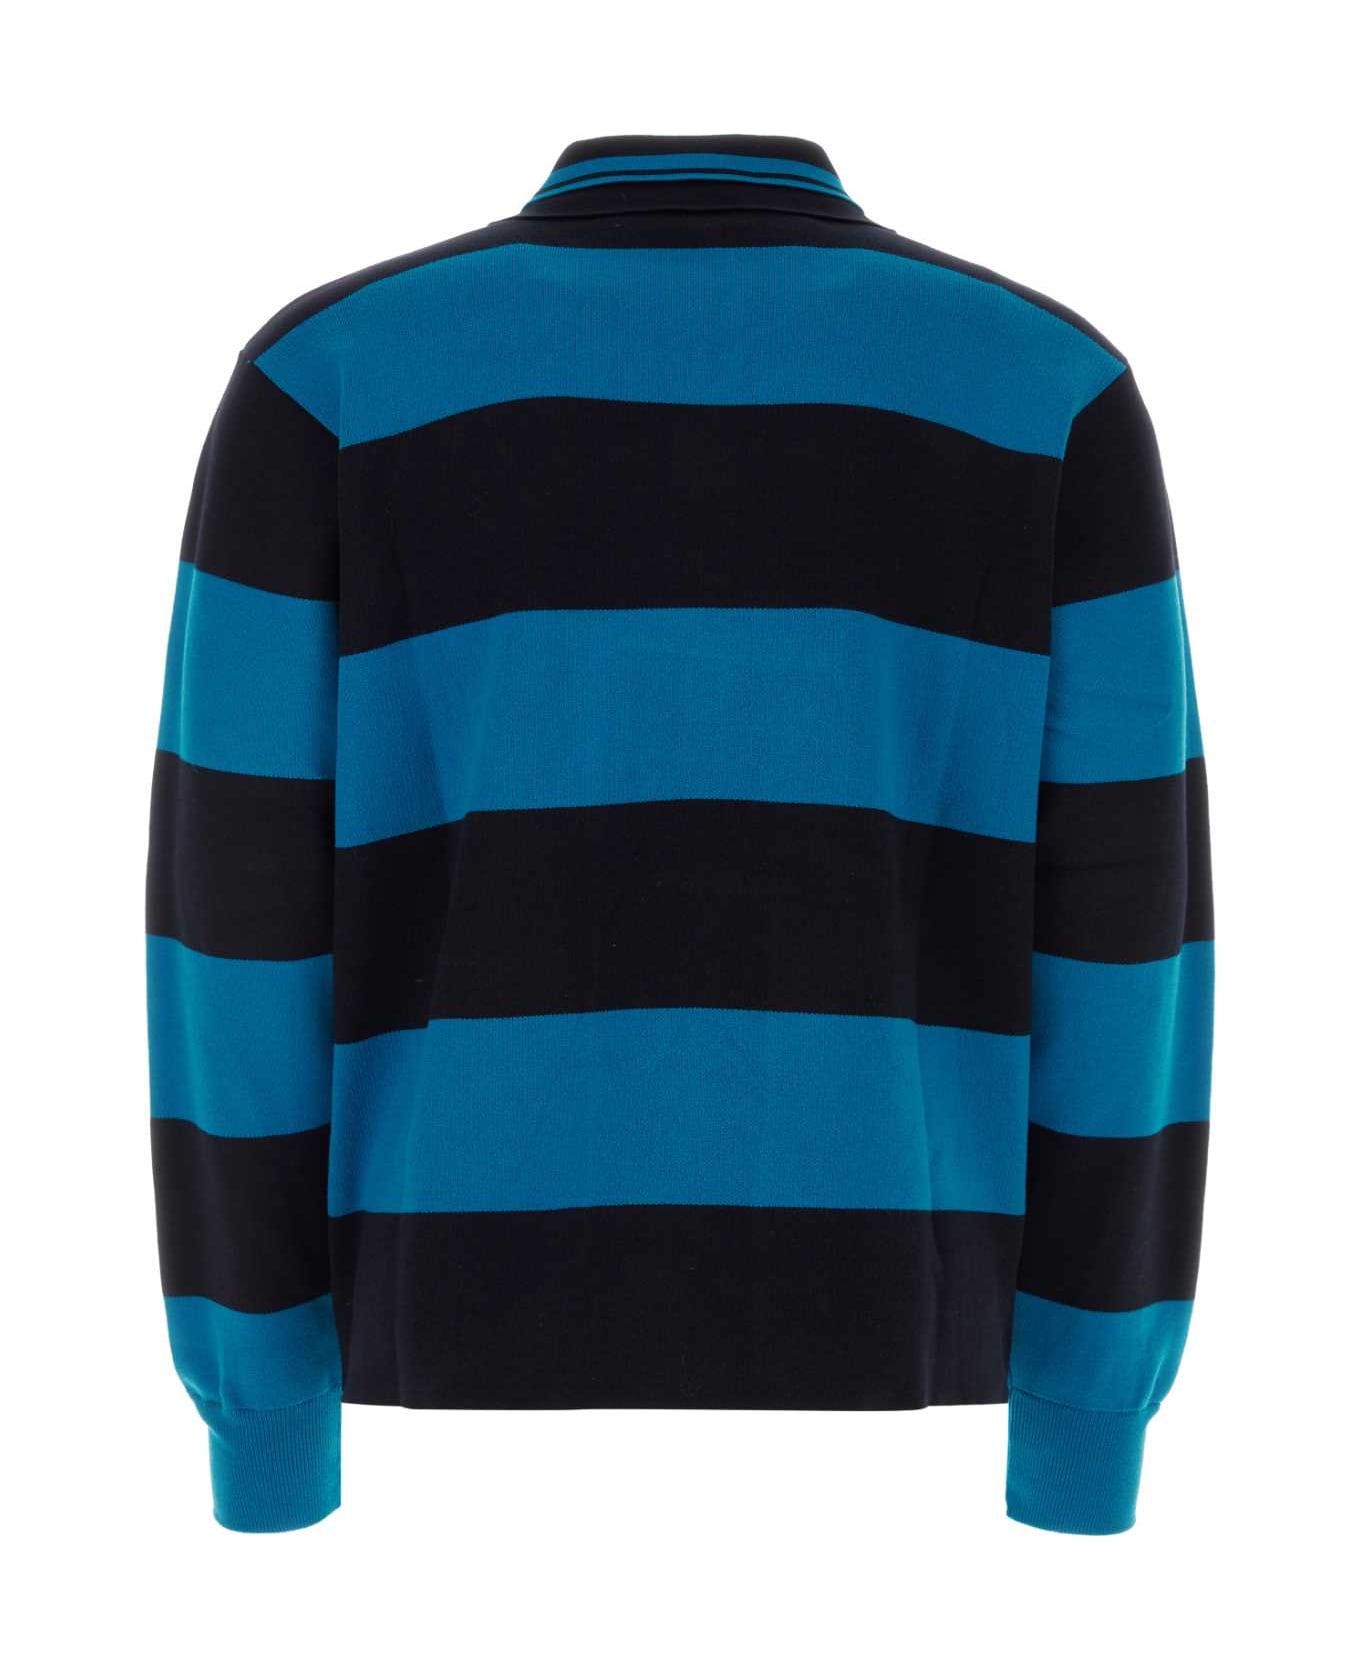 Botter Two-tone Cotton Sweatshirt - BOTTER BLUE DARK NAVY STRIPE